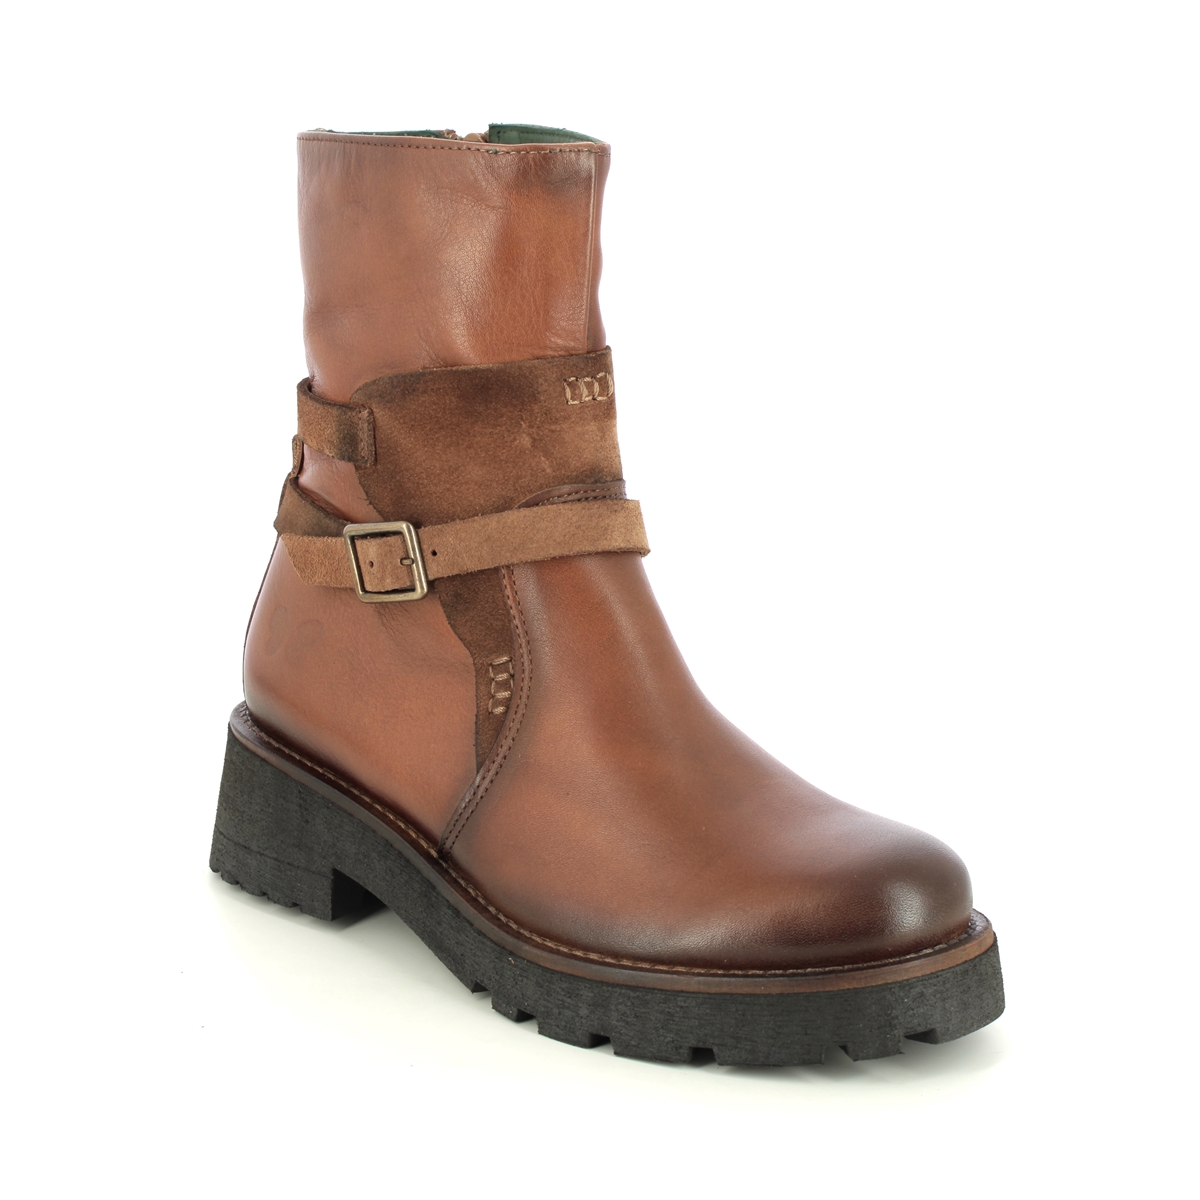 Felmini - Nadir  Strap (Tan Leather ) D550-11 In Size 39 In Plain Tan Leather